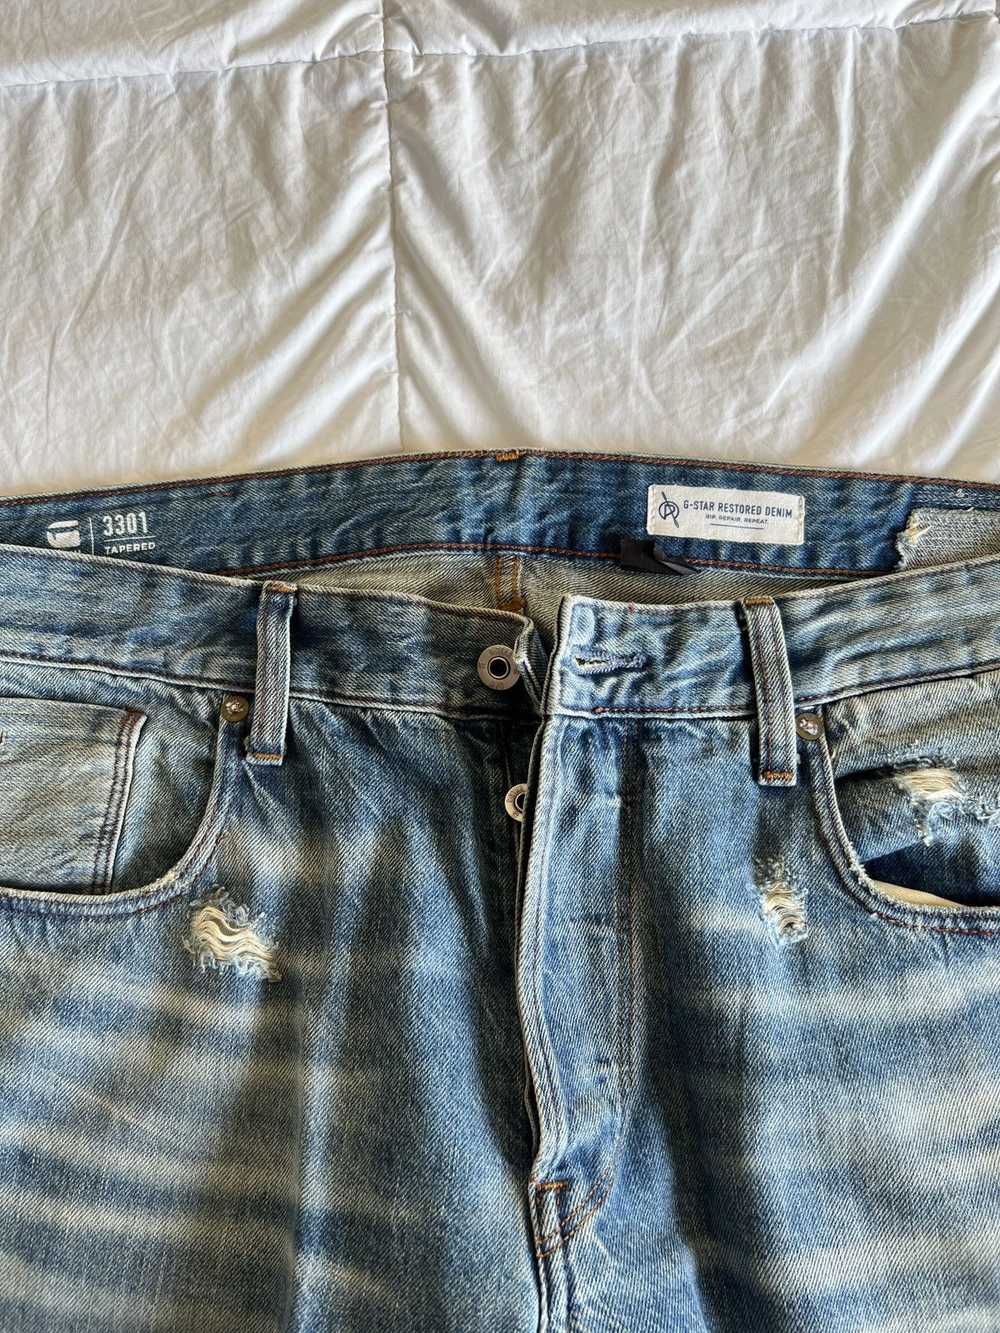 Gstar g star slim denim distressed jeans - image 6